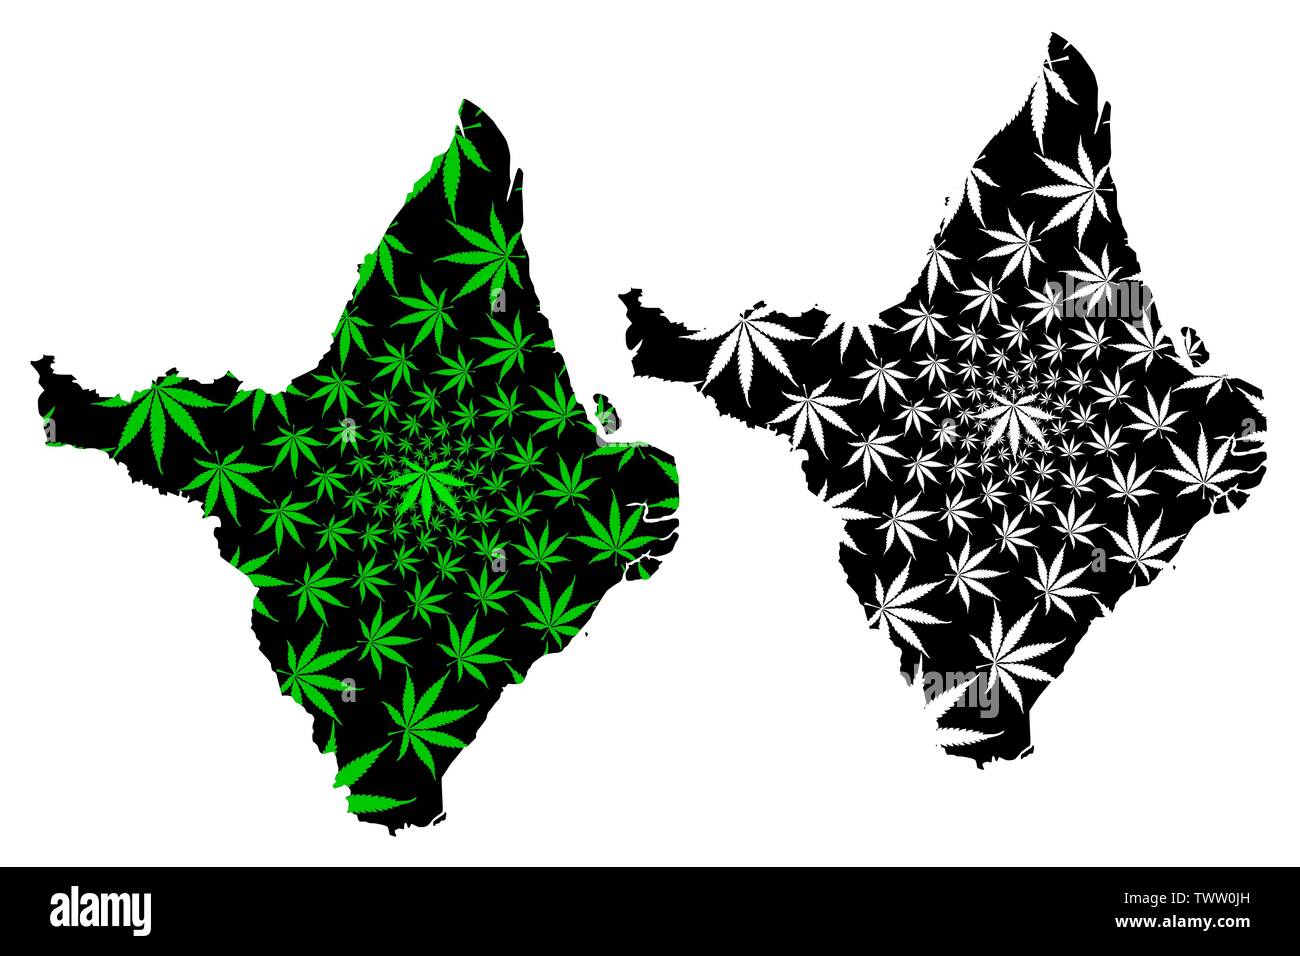 Amapa (Region of Brazil, Federated state, Federative Republic of Brazil) map is designed cannabis leaf green and black, Amapá map made of marijuana (m Stock Vector